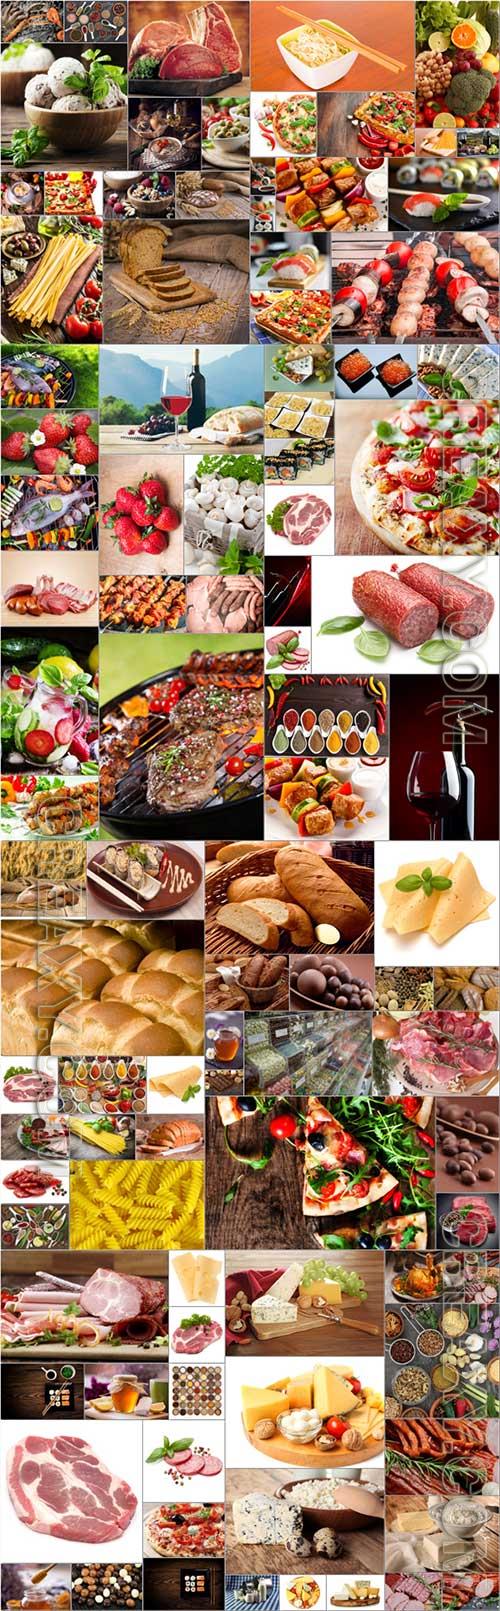 Food, meat, vegetables, fruits, fish, stock photo bundle vol 9